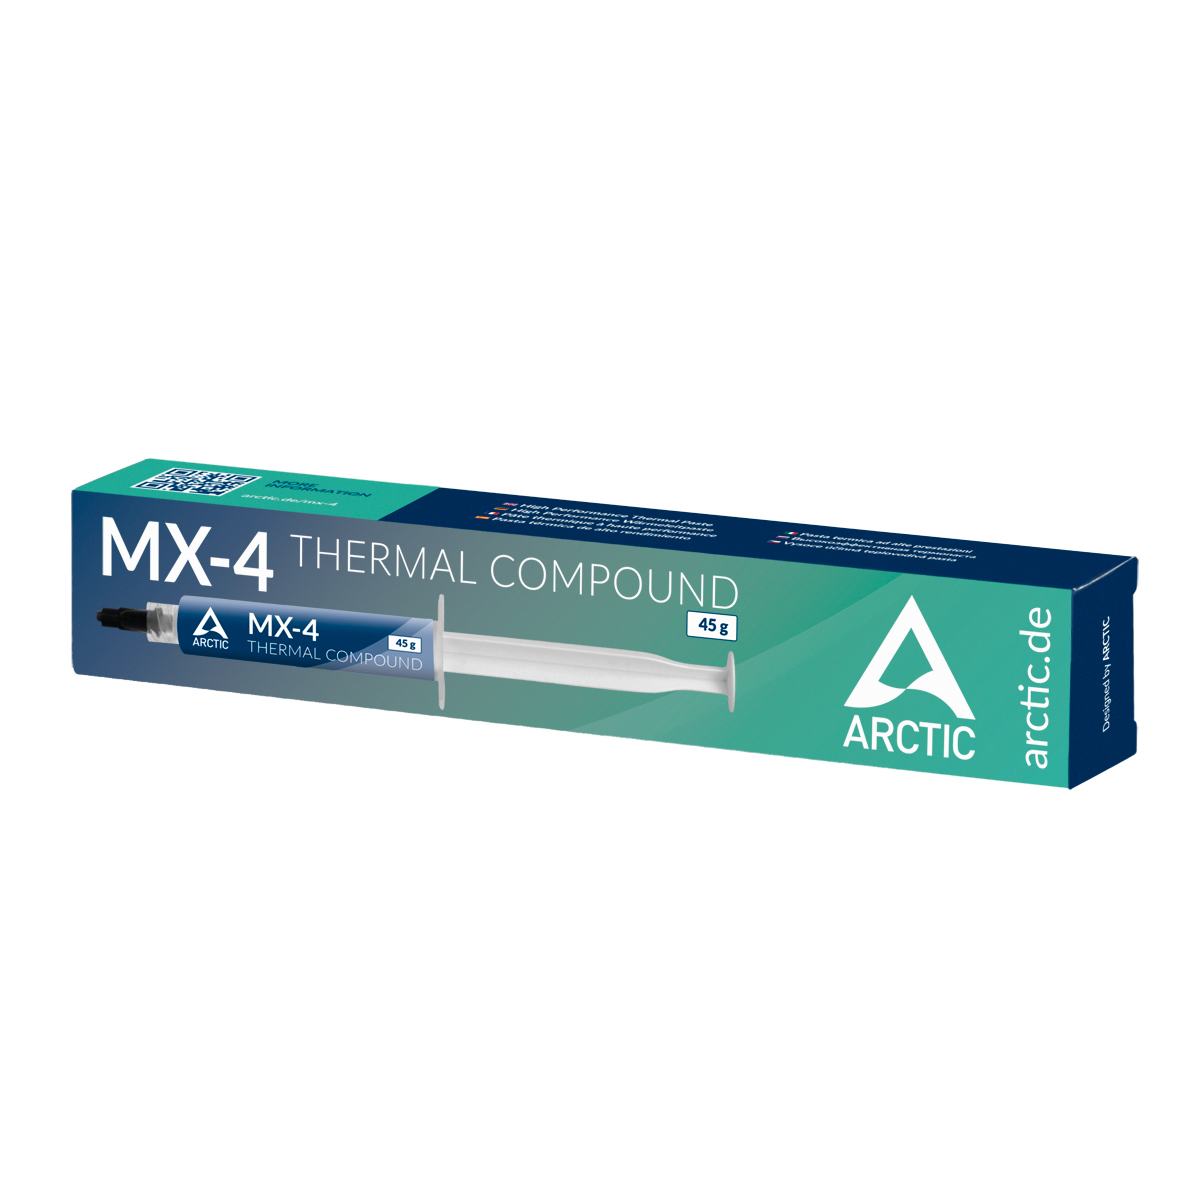 MX-4, Premium Performance Thermal Paste